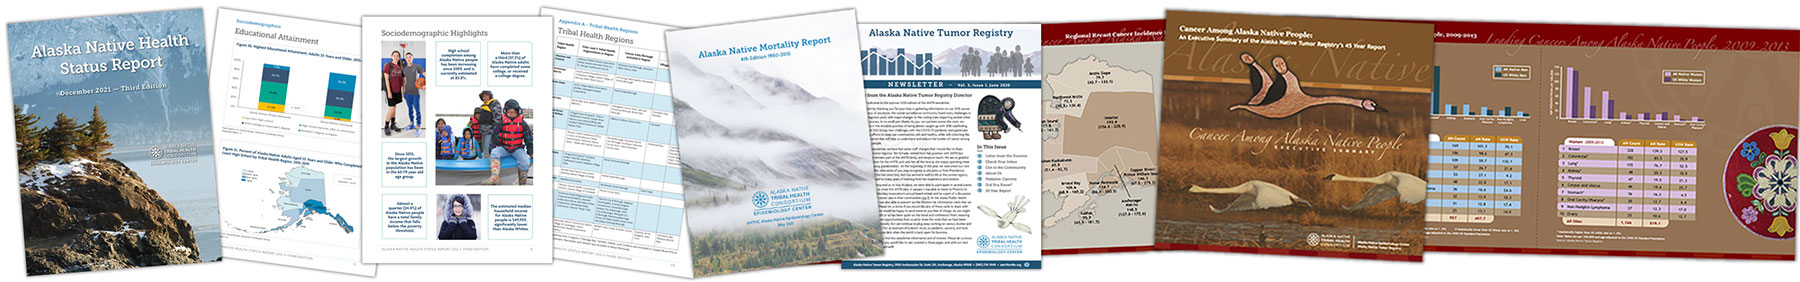 photos of Alaska Native EpiCenter publications